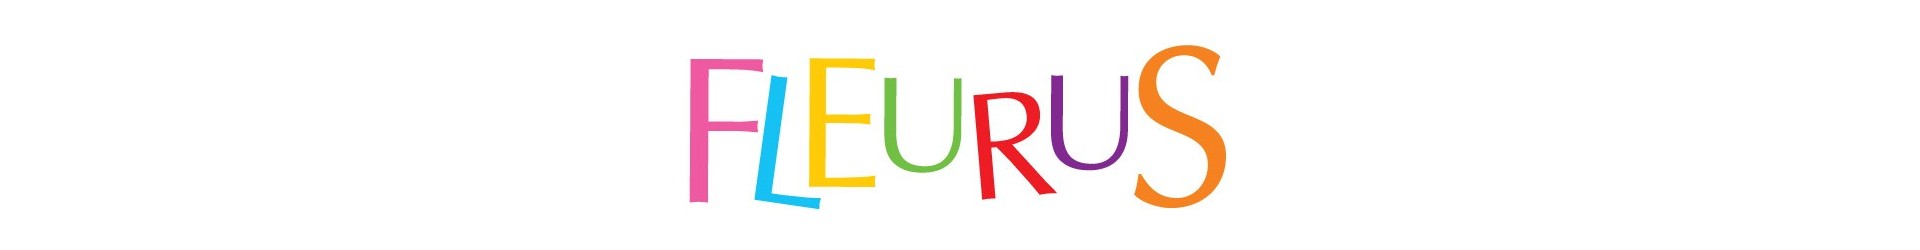 Fleurus Advertising Goodies for Children | Fleurus Derivative